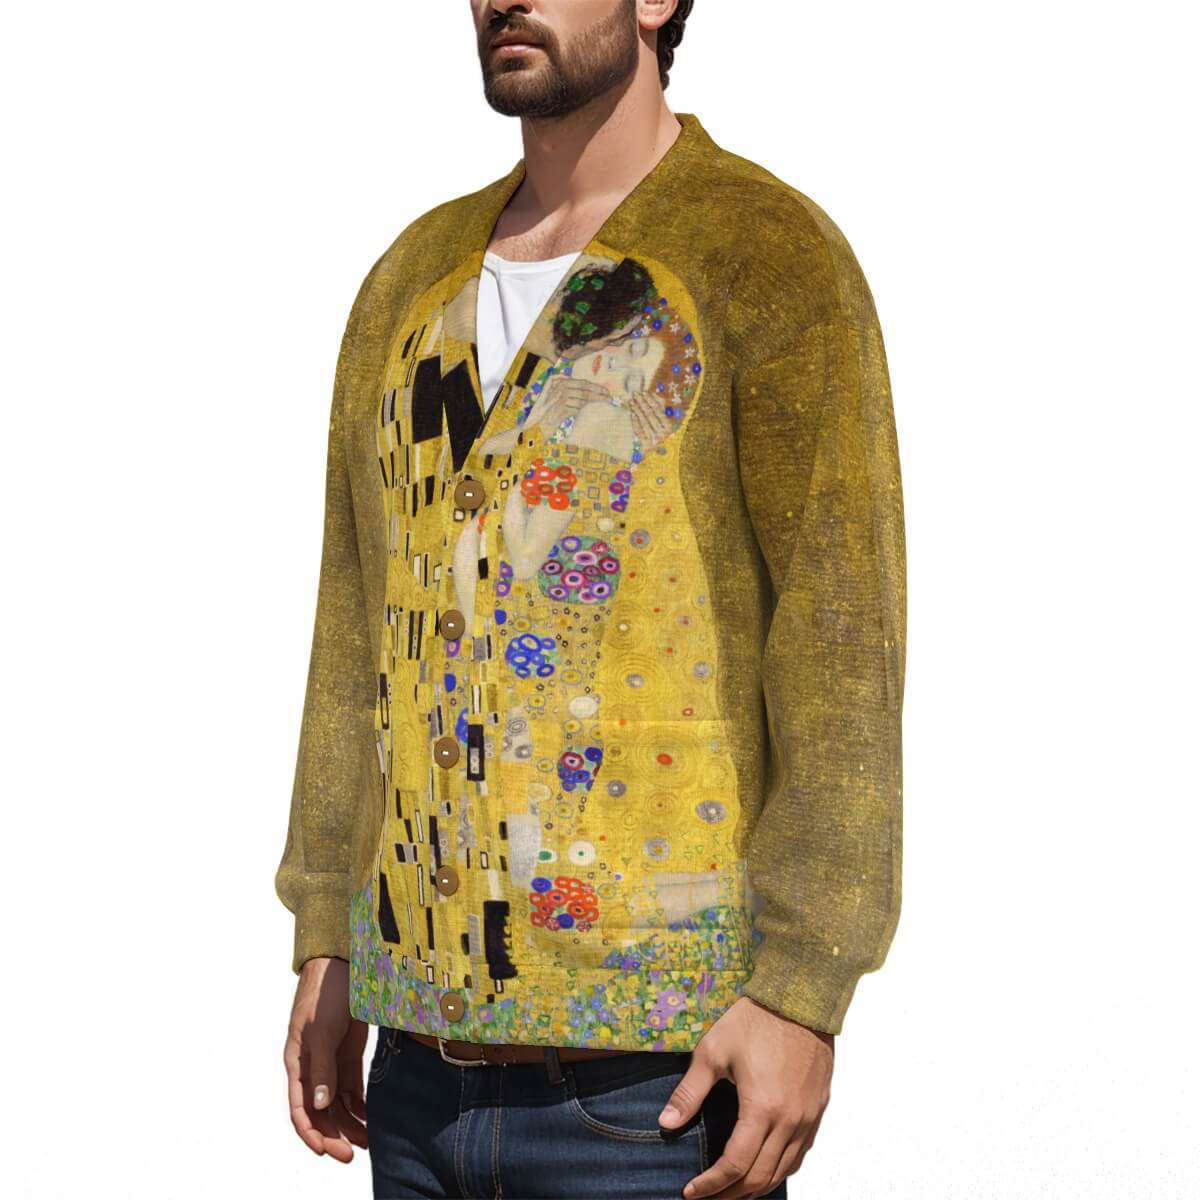 Contemporary Art Sweater